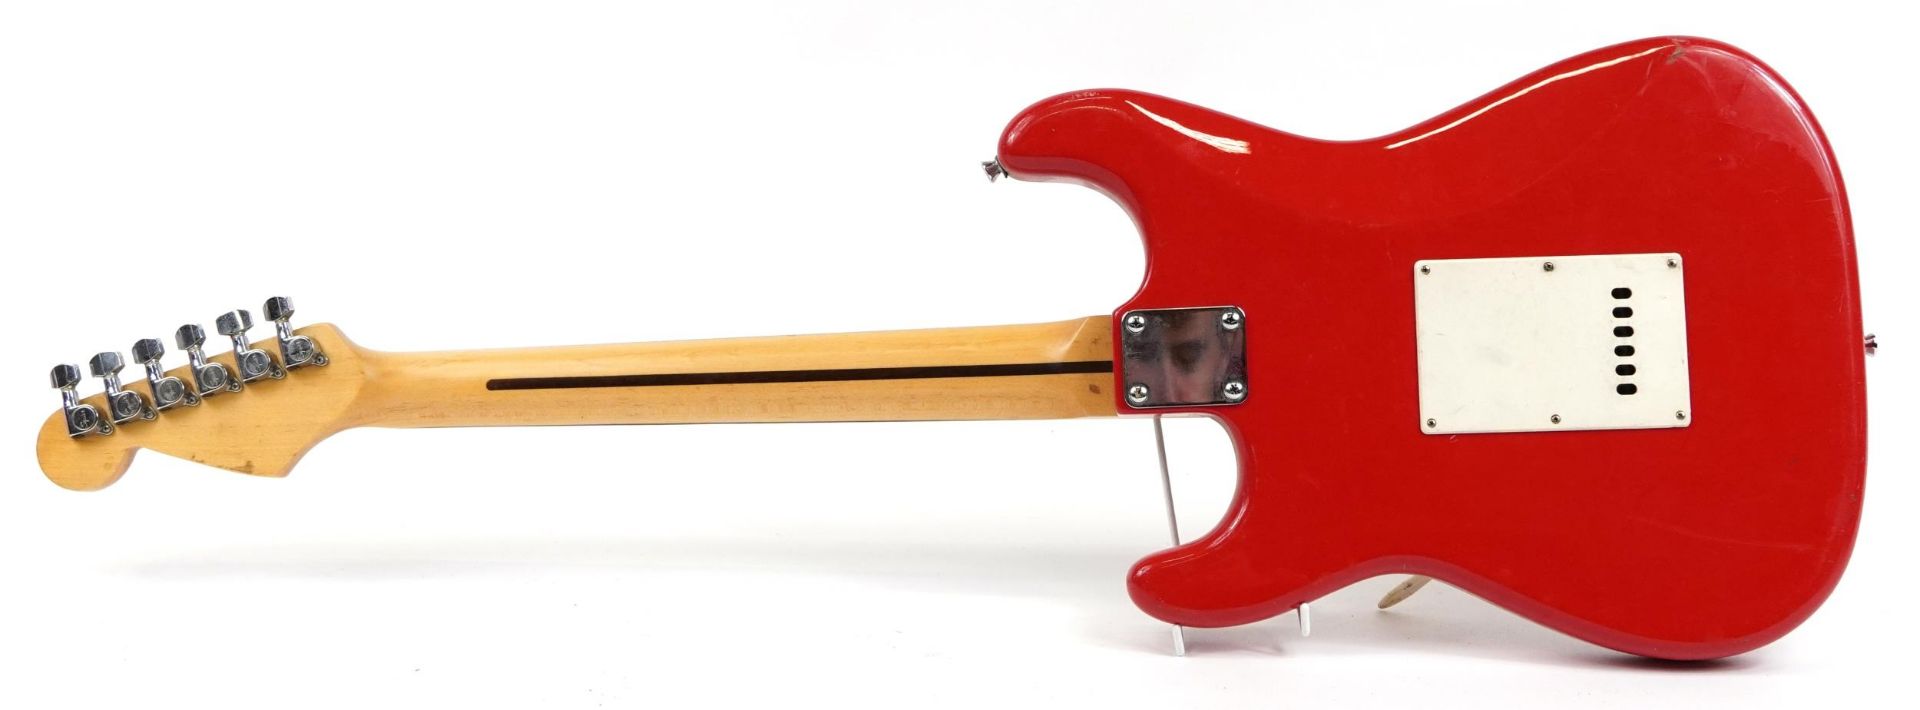 Squire Strat by Fender six string electric guitar - Bild 3 aus 3